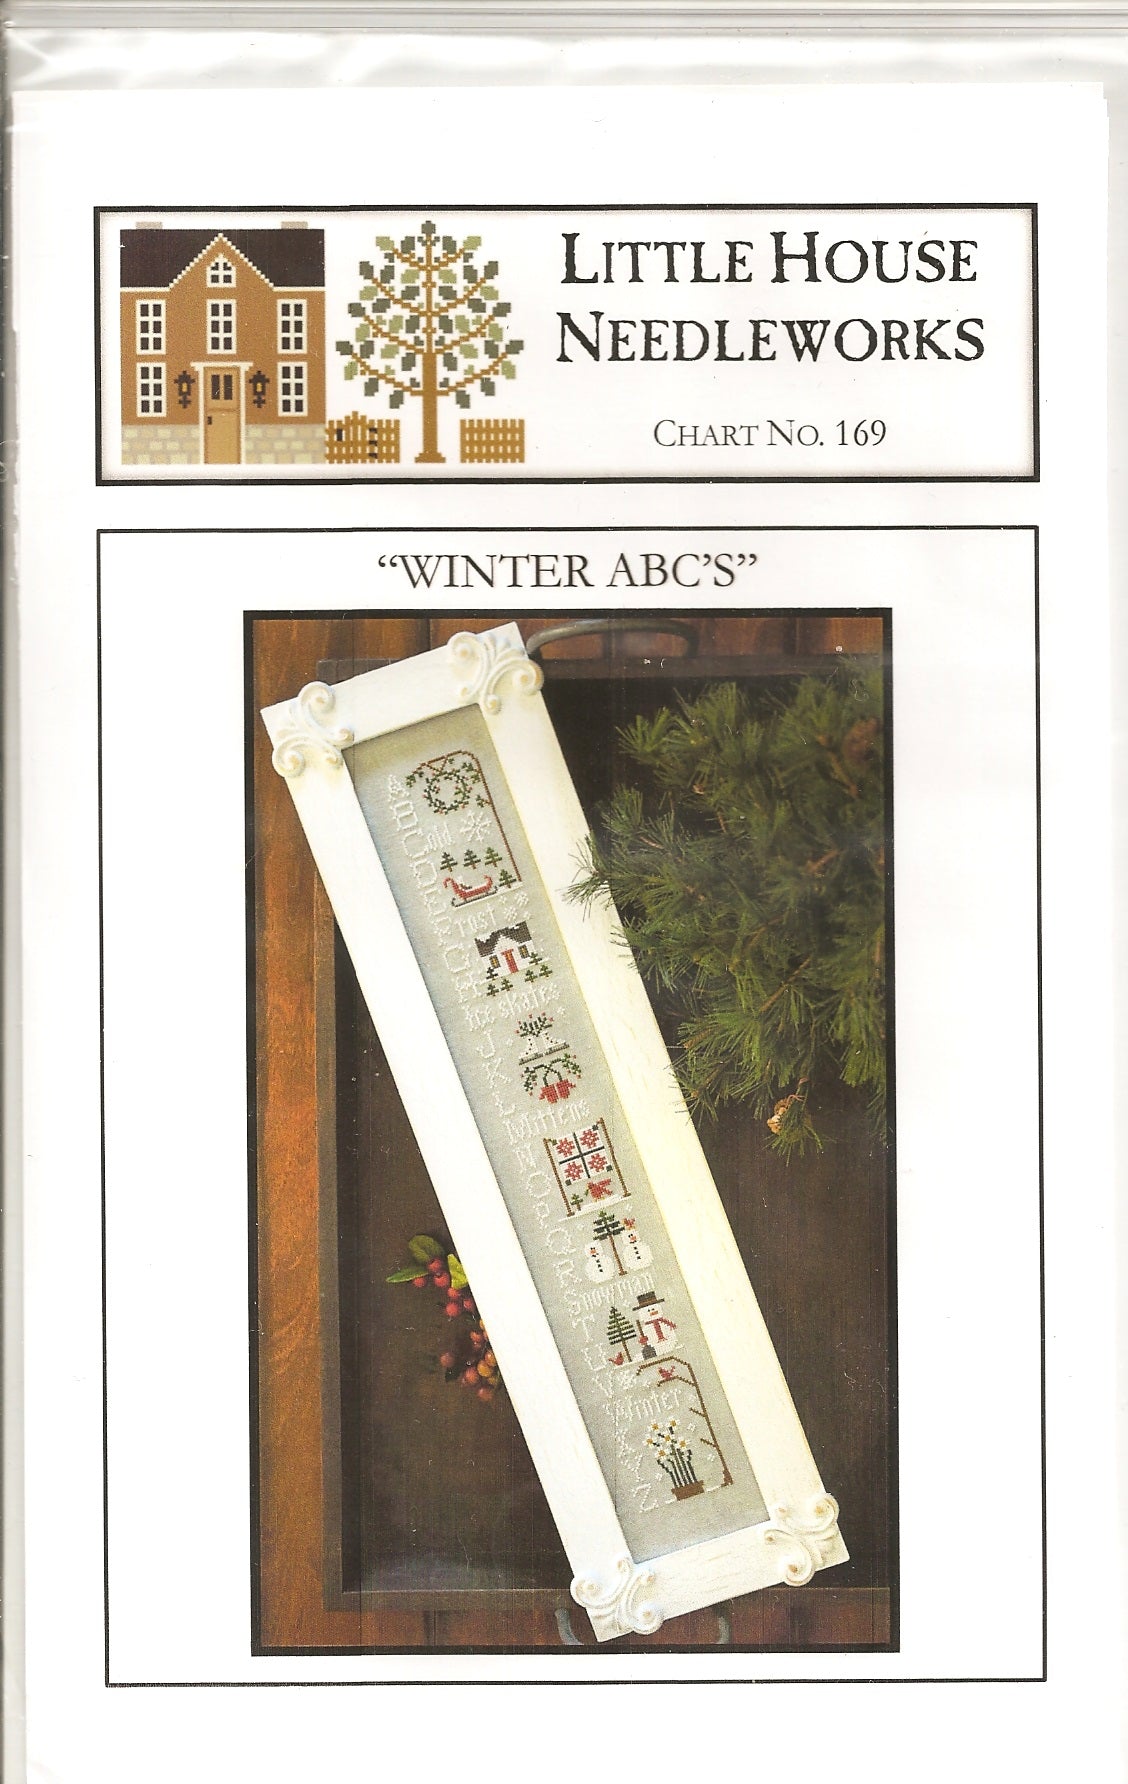 Little House Needleworks Winter ABC's LHN169 cross stitch pattern